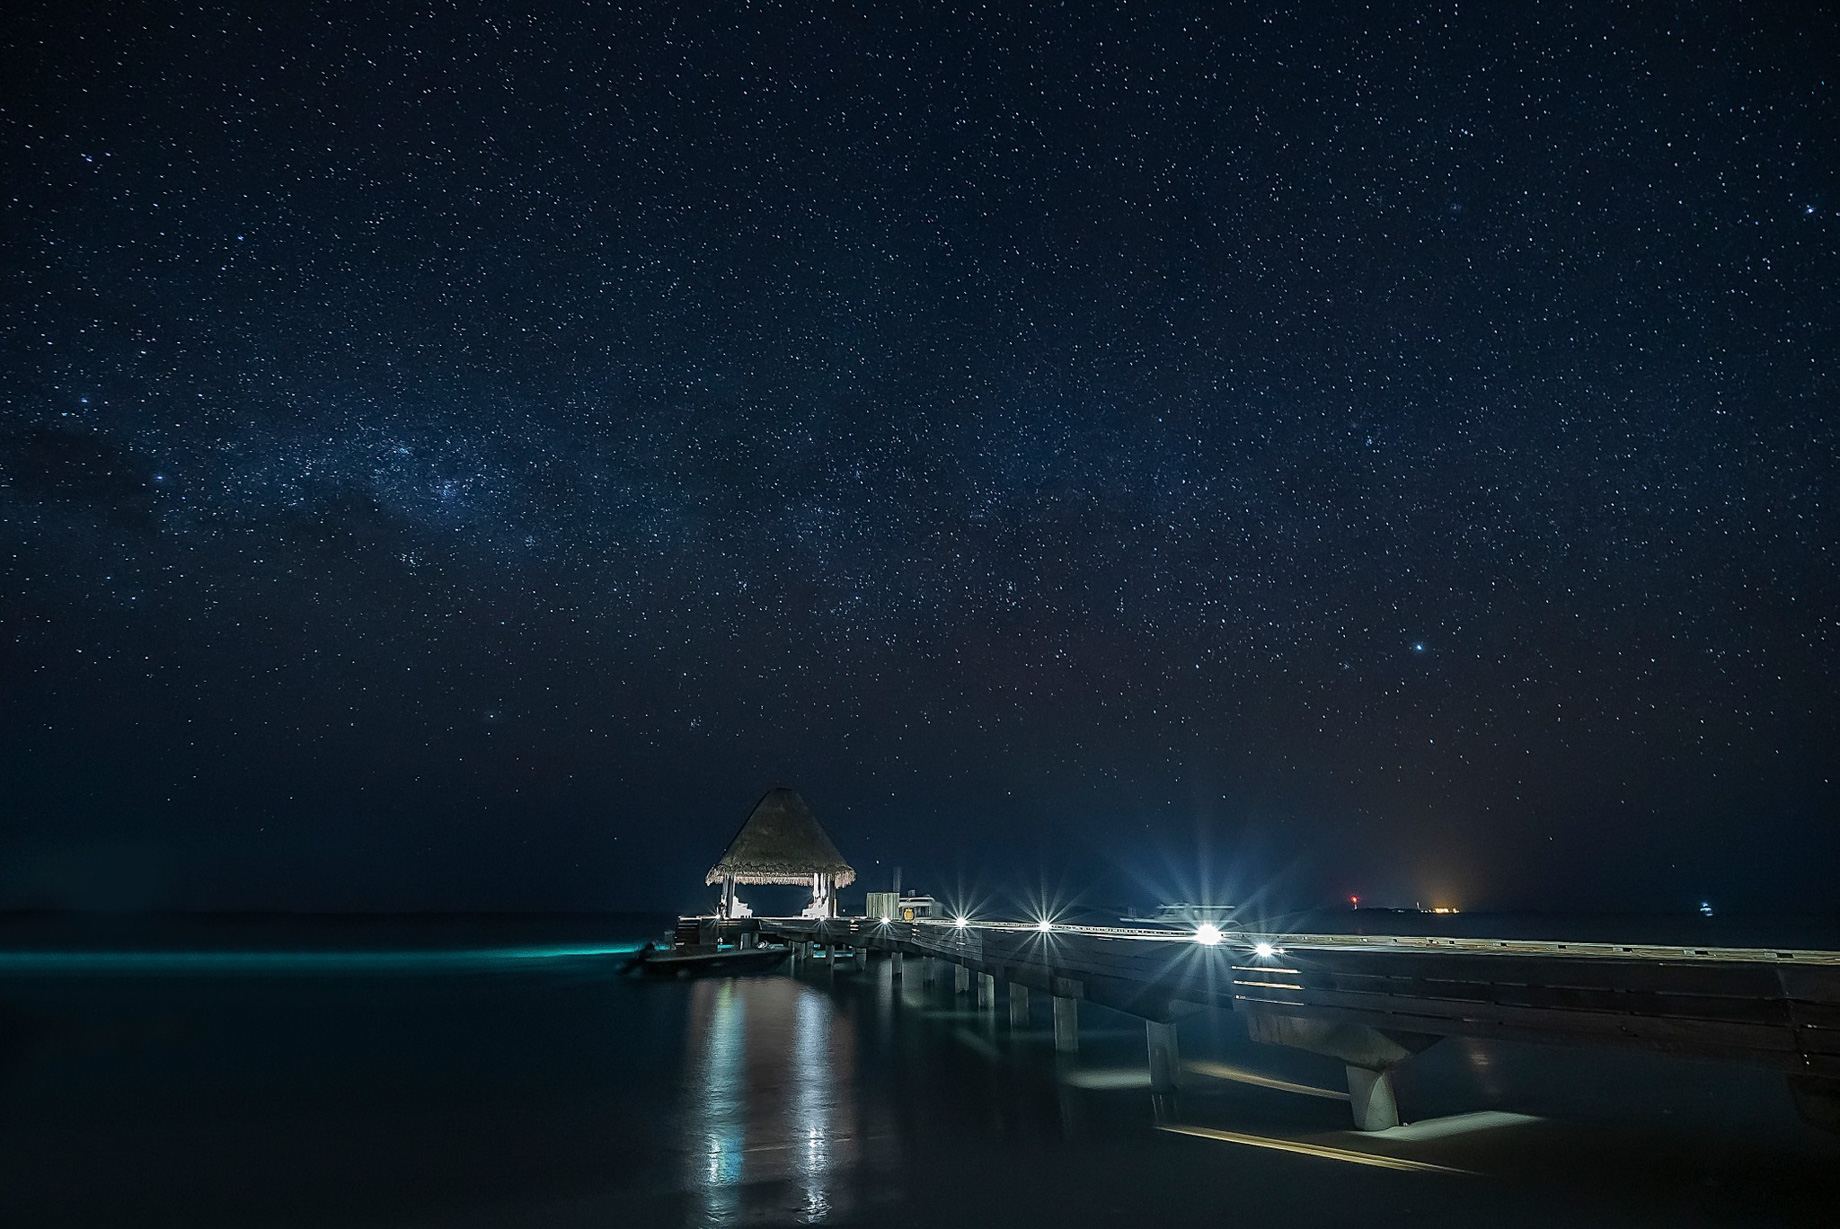 Anantara Kihavah Maldives Villas Resort – Baa Atoll, Maldives – Resort Stargazing